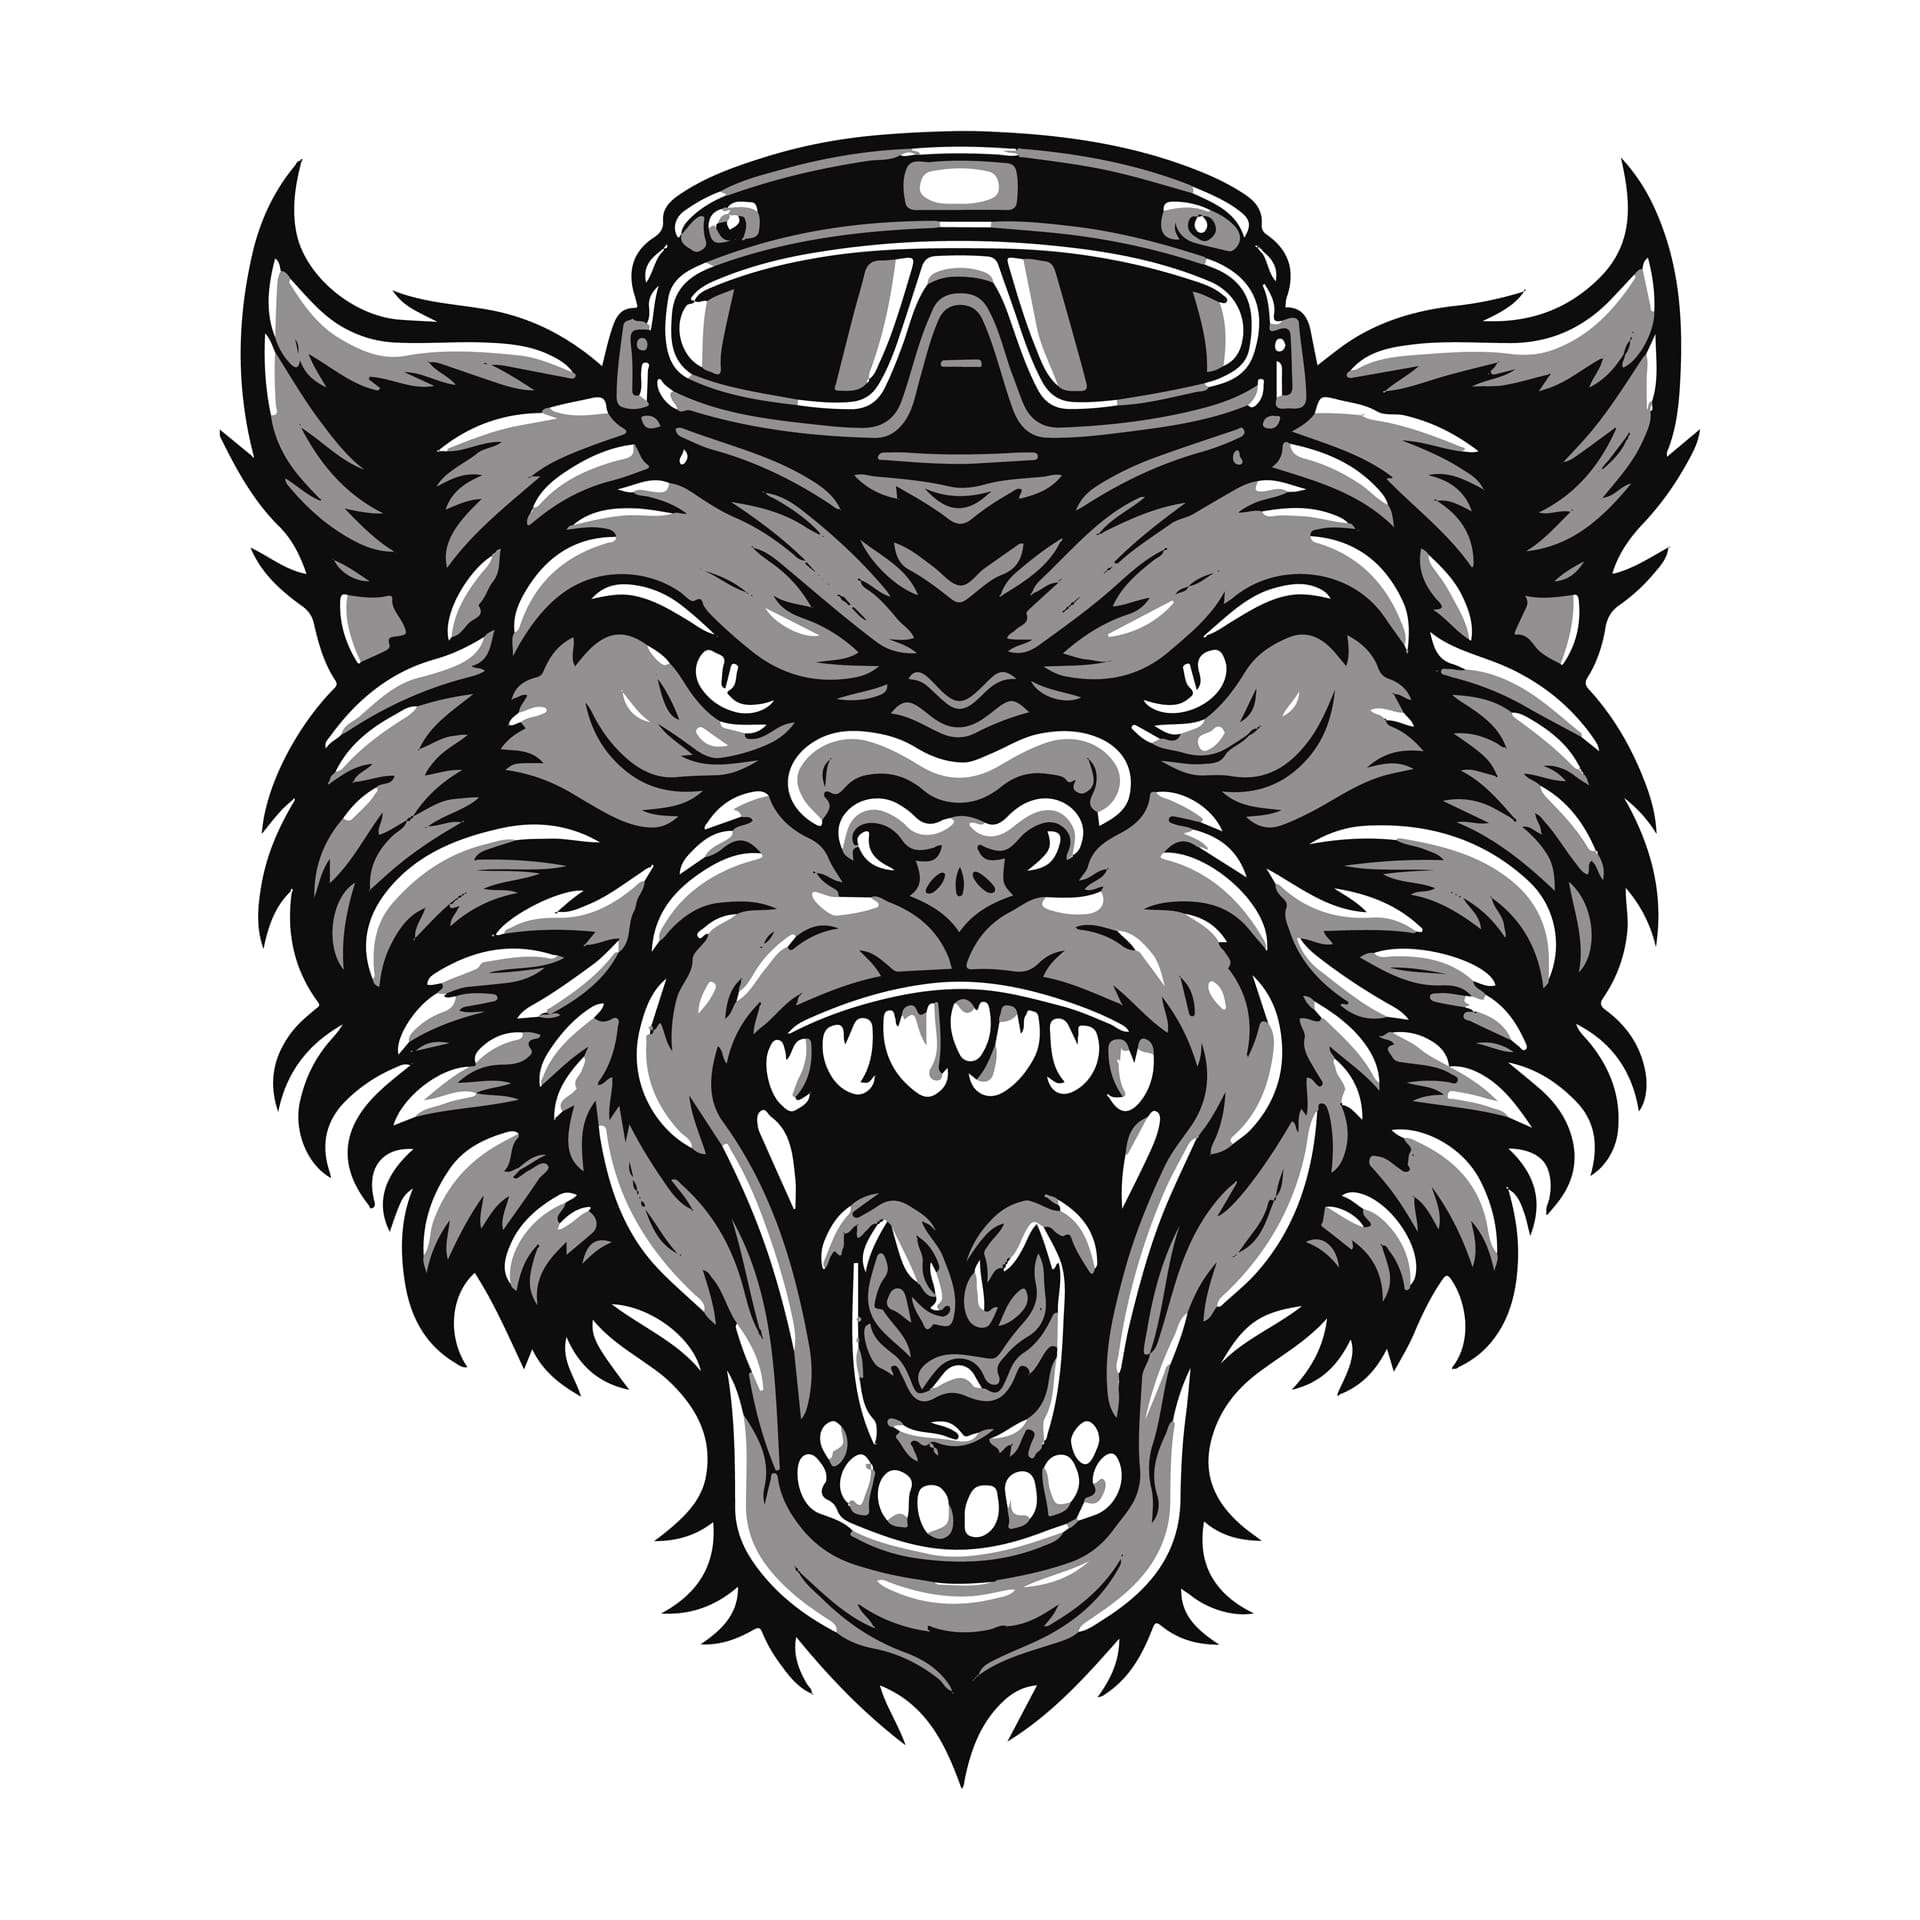 Hand drawn wolf head logo design